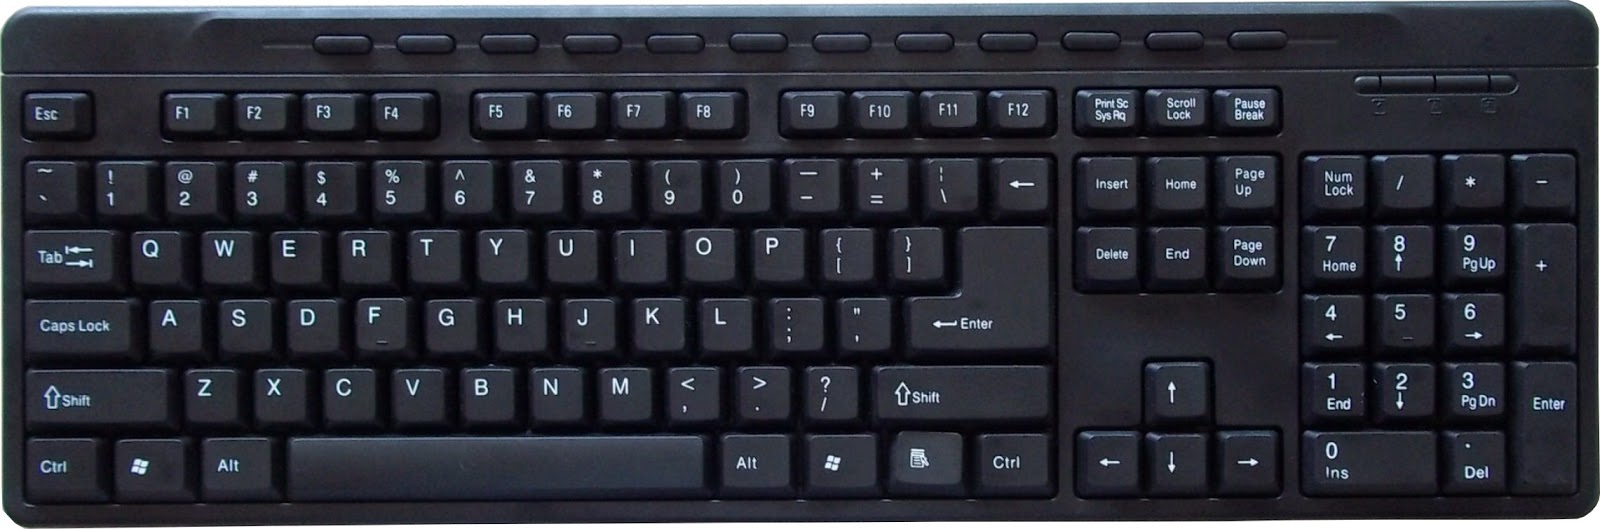 Struktur Keyboard Pada Komputer - Blog Dream